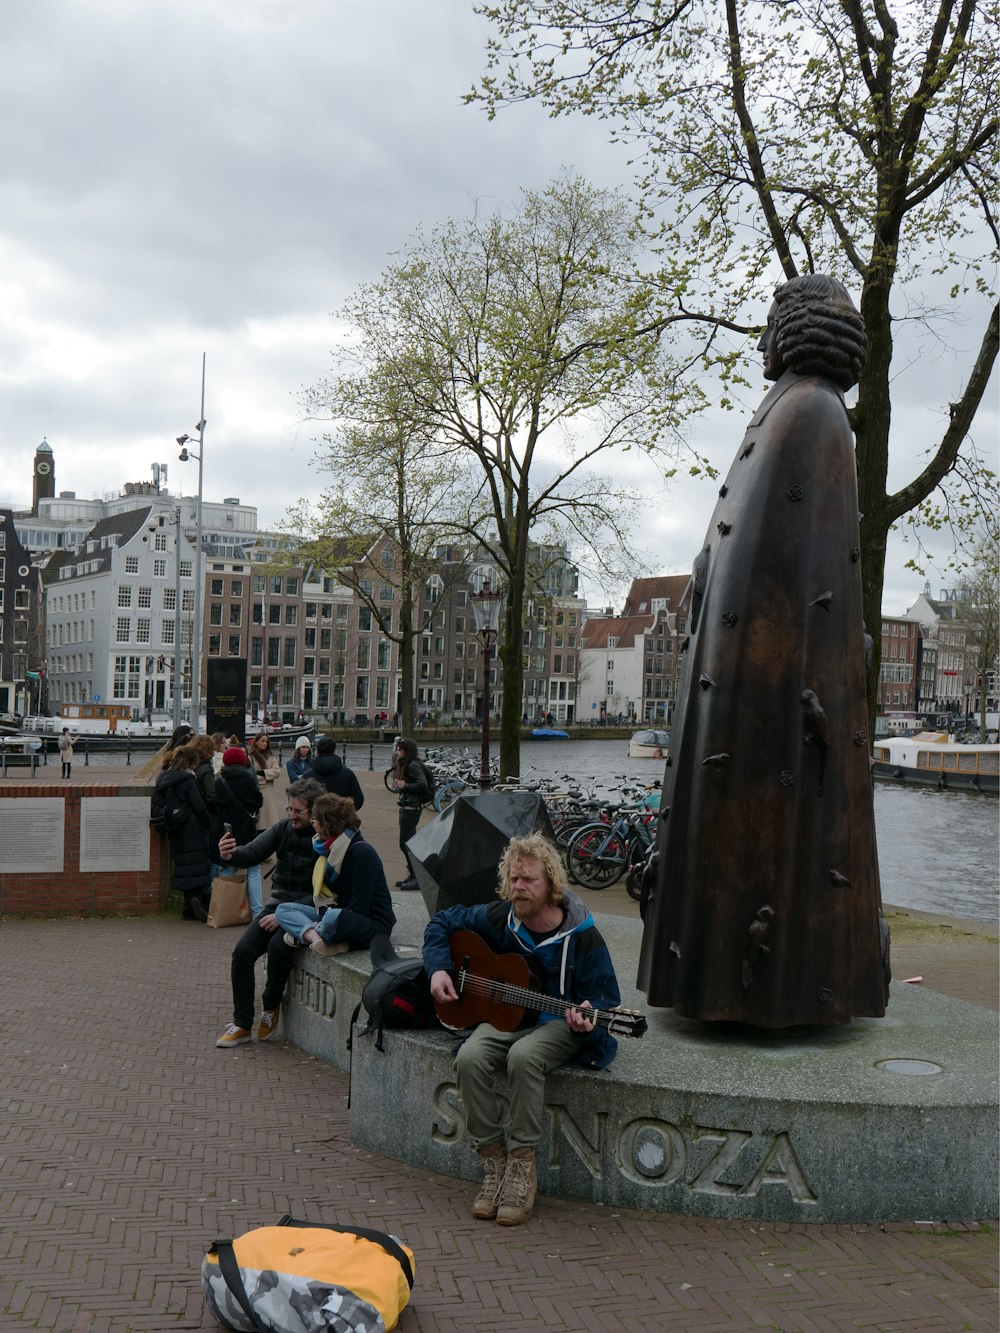 un gruppo di persone sedute su una panchina accanto a una statua